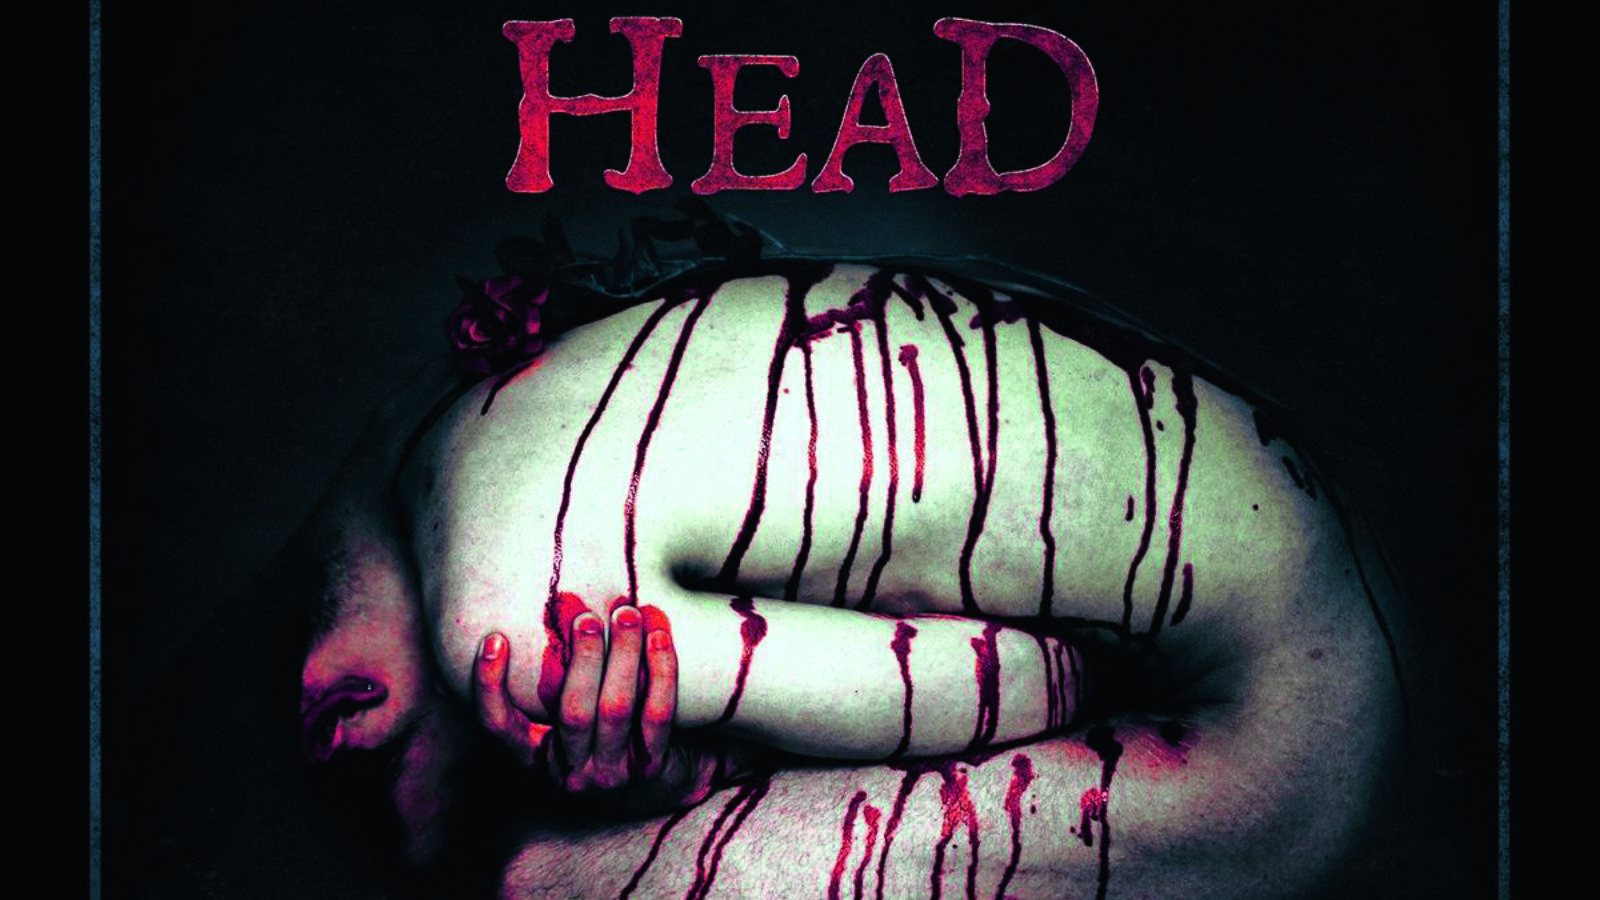 Machine Head – Catharsis